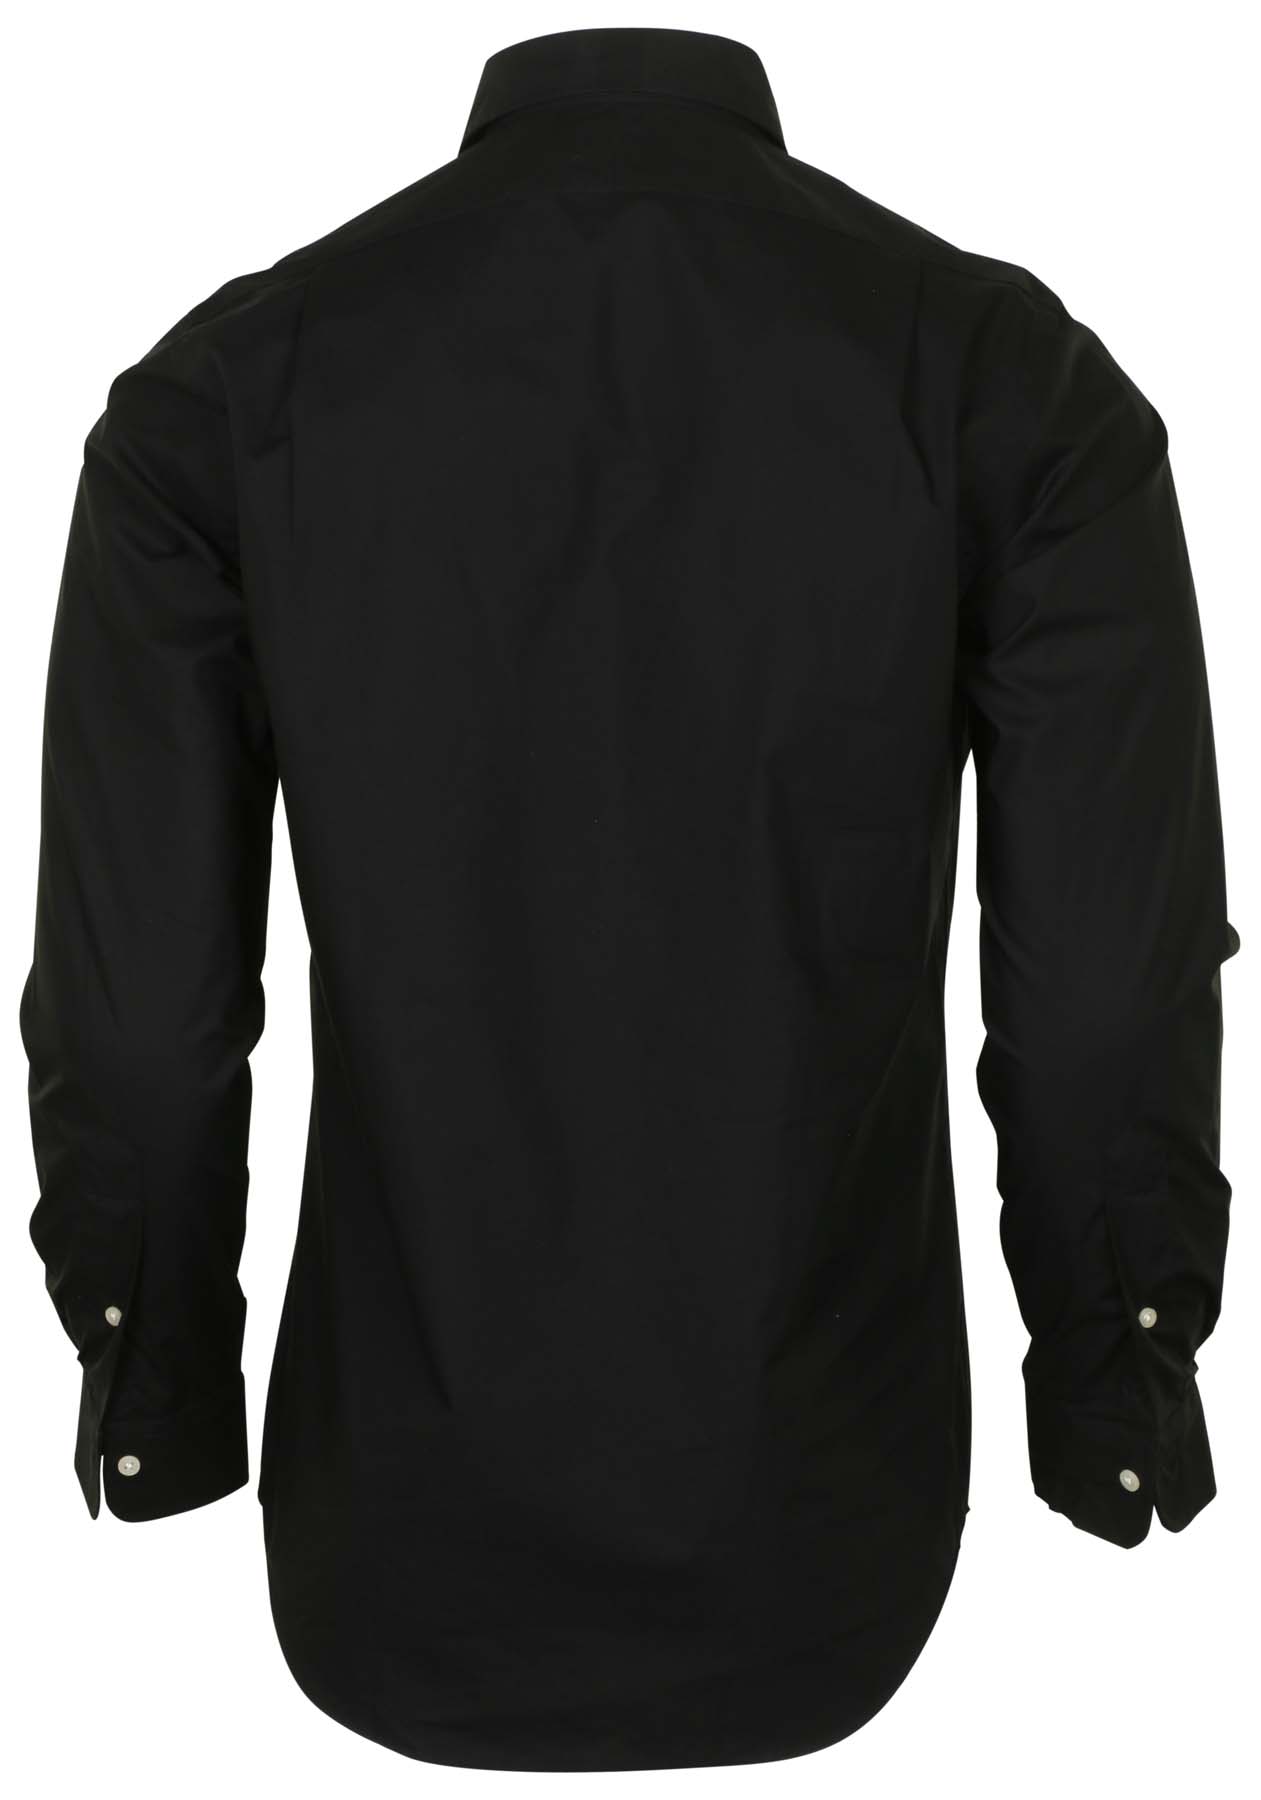 Polo RL Men's Classic Fit Long Sleeve Shirt | eBay